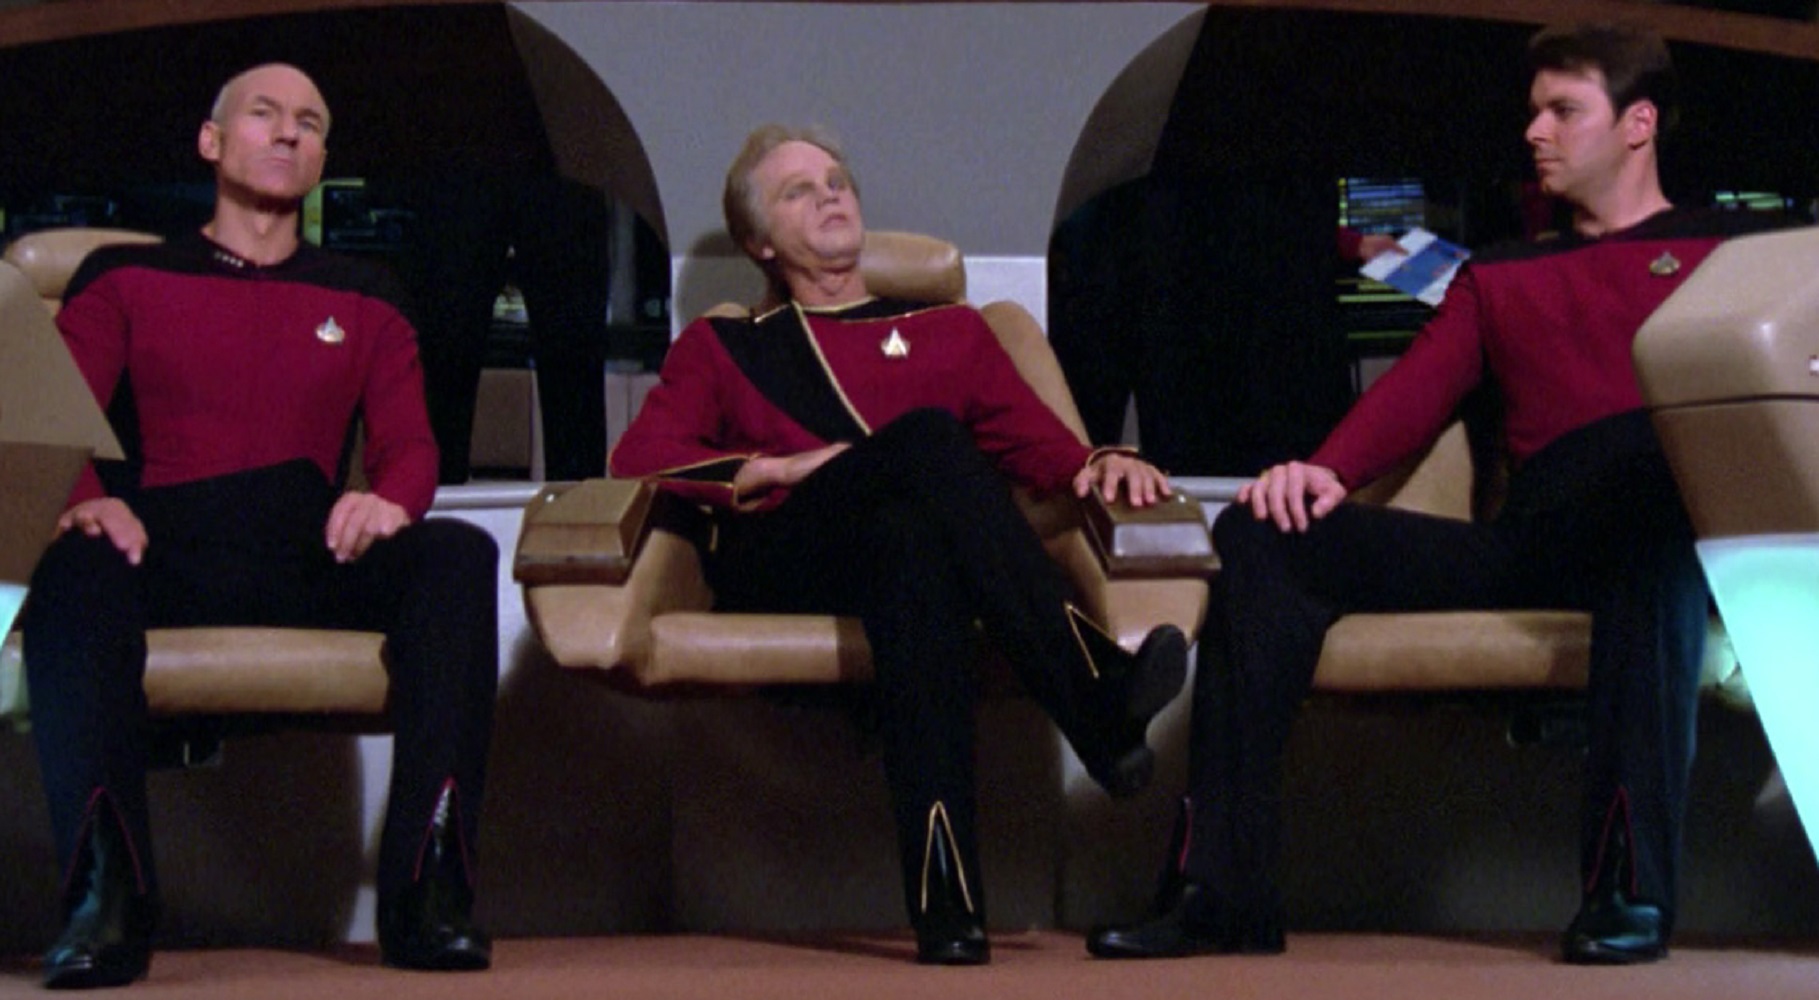 Star Trek TNG uniforms